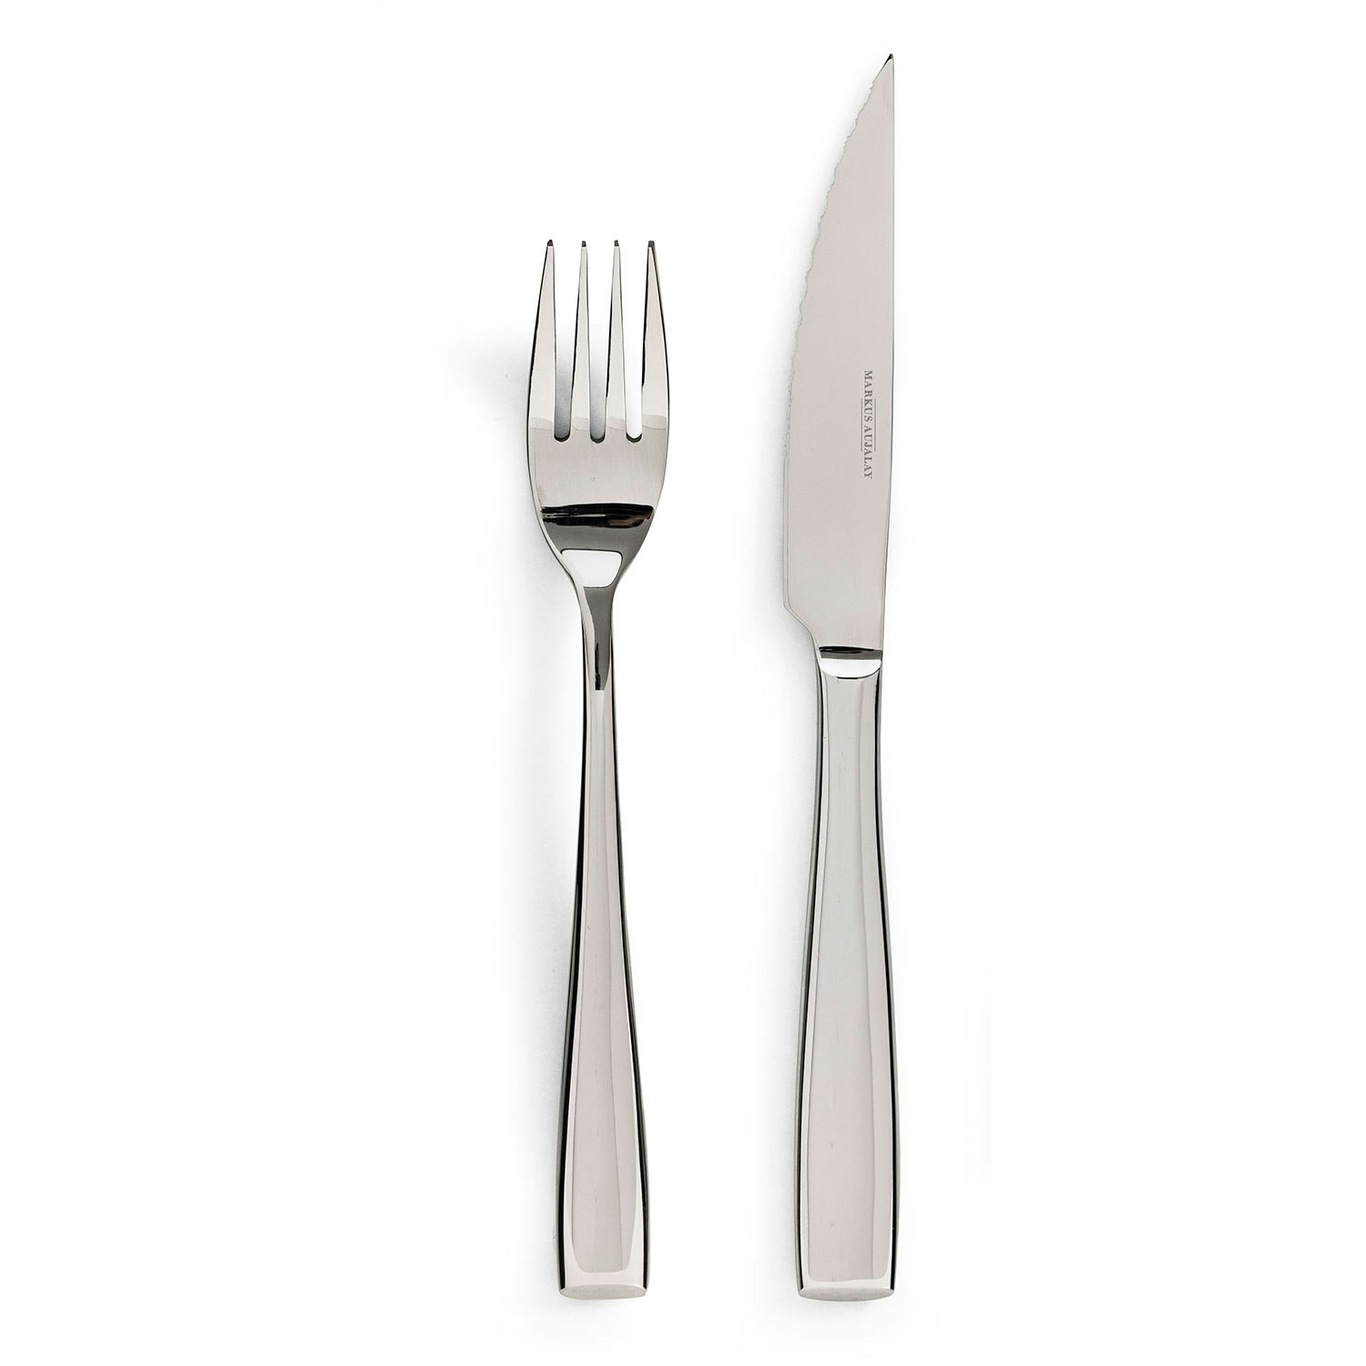 https://royaldesign.com/image/2/markus-aujalay-markus-grill-cutlery-12-pieces-0?w=800&quality=80